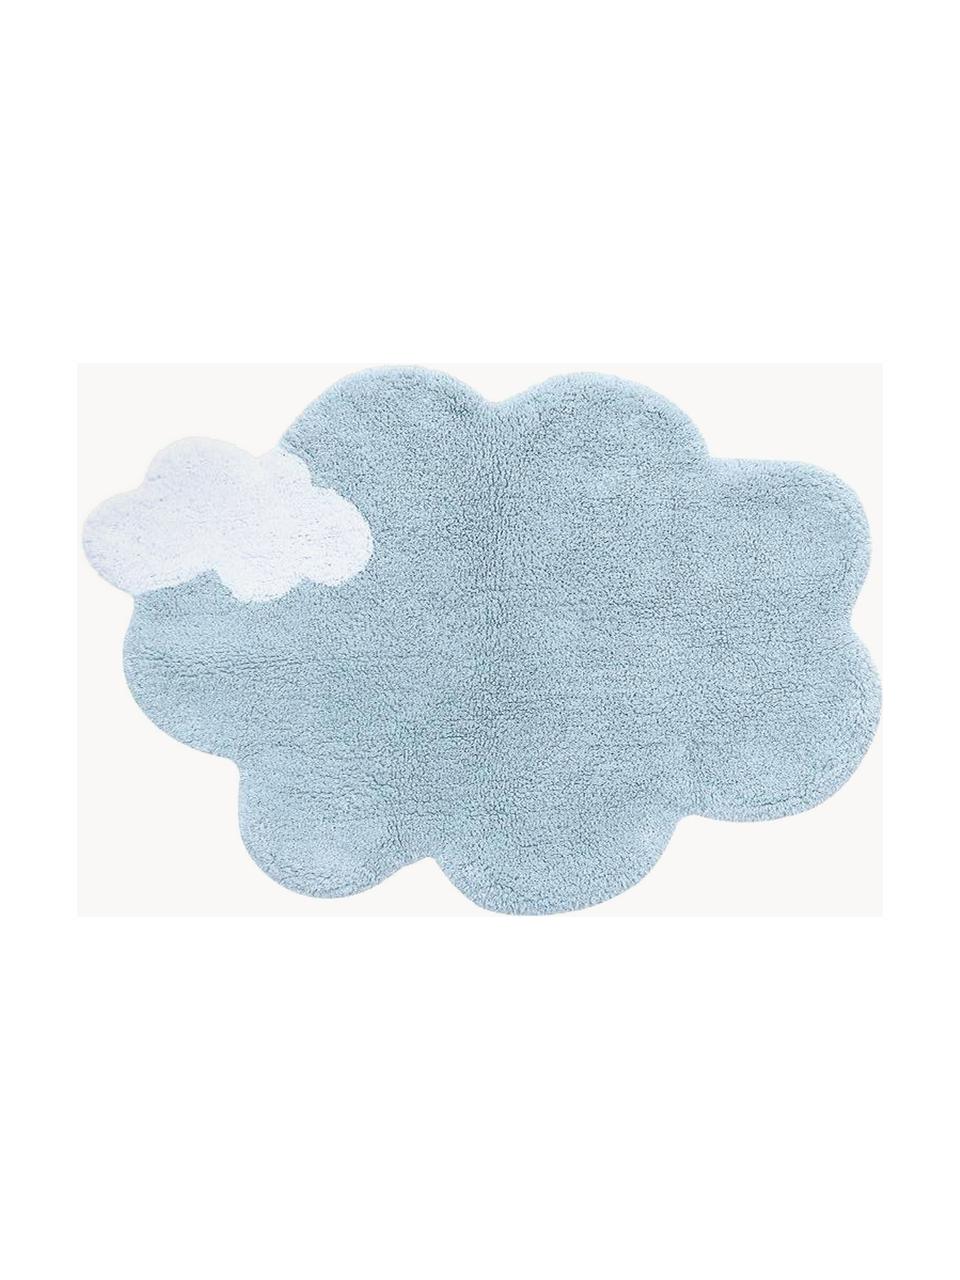 Alfombra infantil artesanal Dream, lavable, Parte superior: 97% algodón, 3% fibra sin, Reverso: 100% algodón, Azul claro, blanco, An 70 x L 100 cmcm(Tamaño XS)